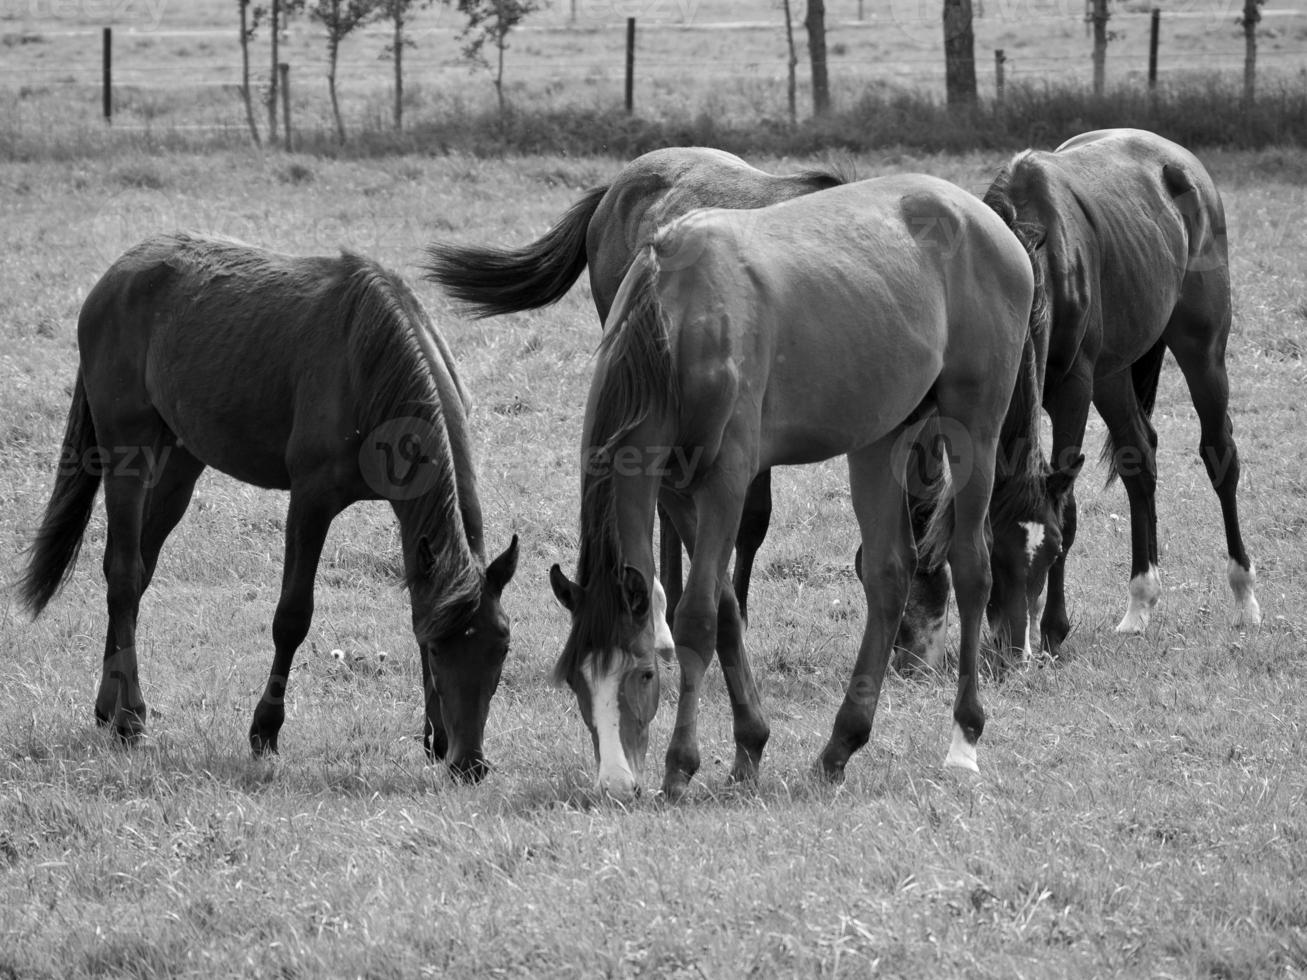 Horses in germany photo